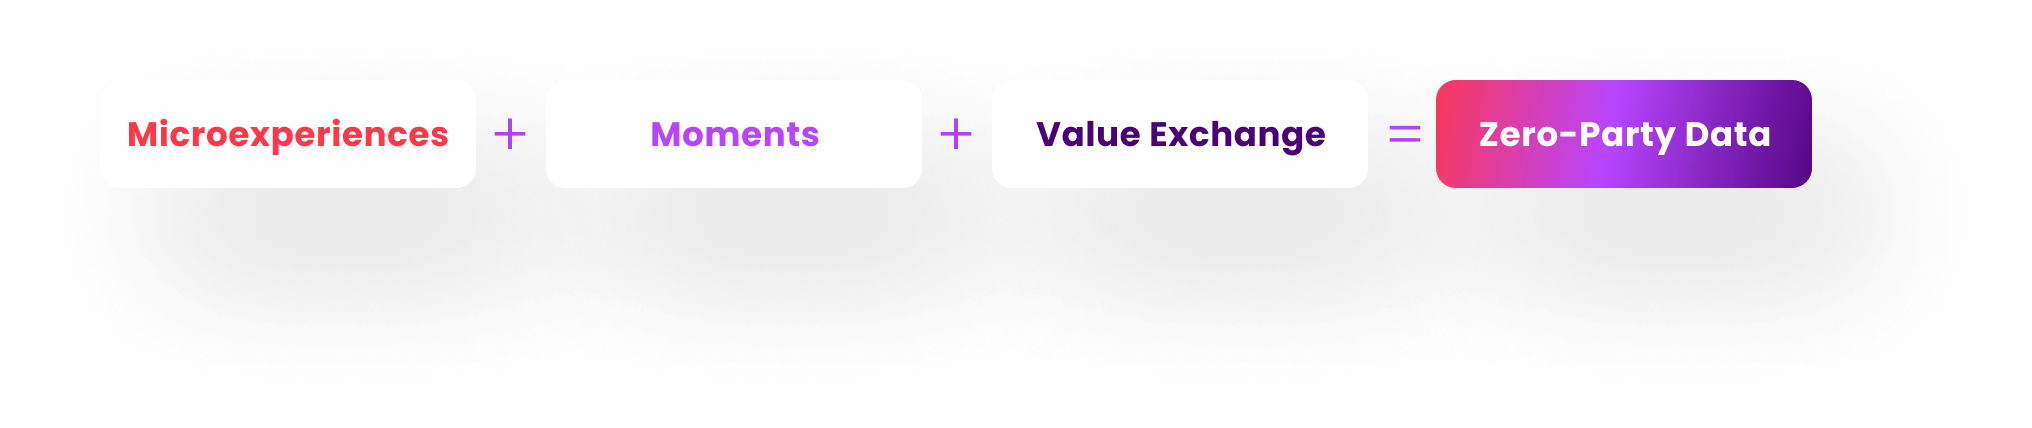 Microexperiences plus Moments plus Value Exchange equals Zero-Party Data